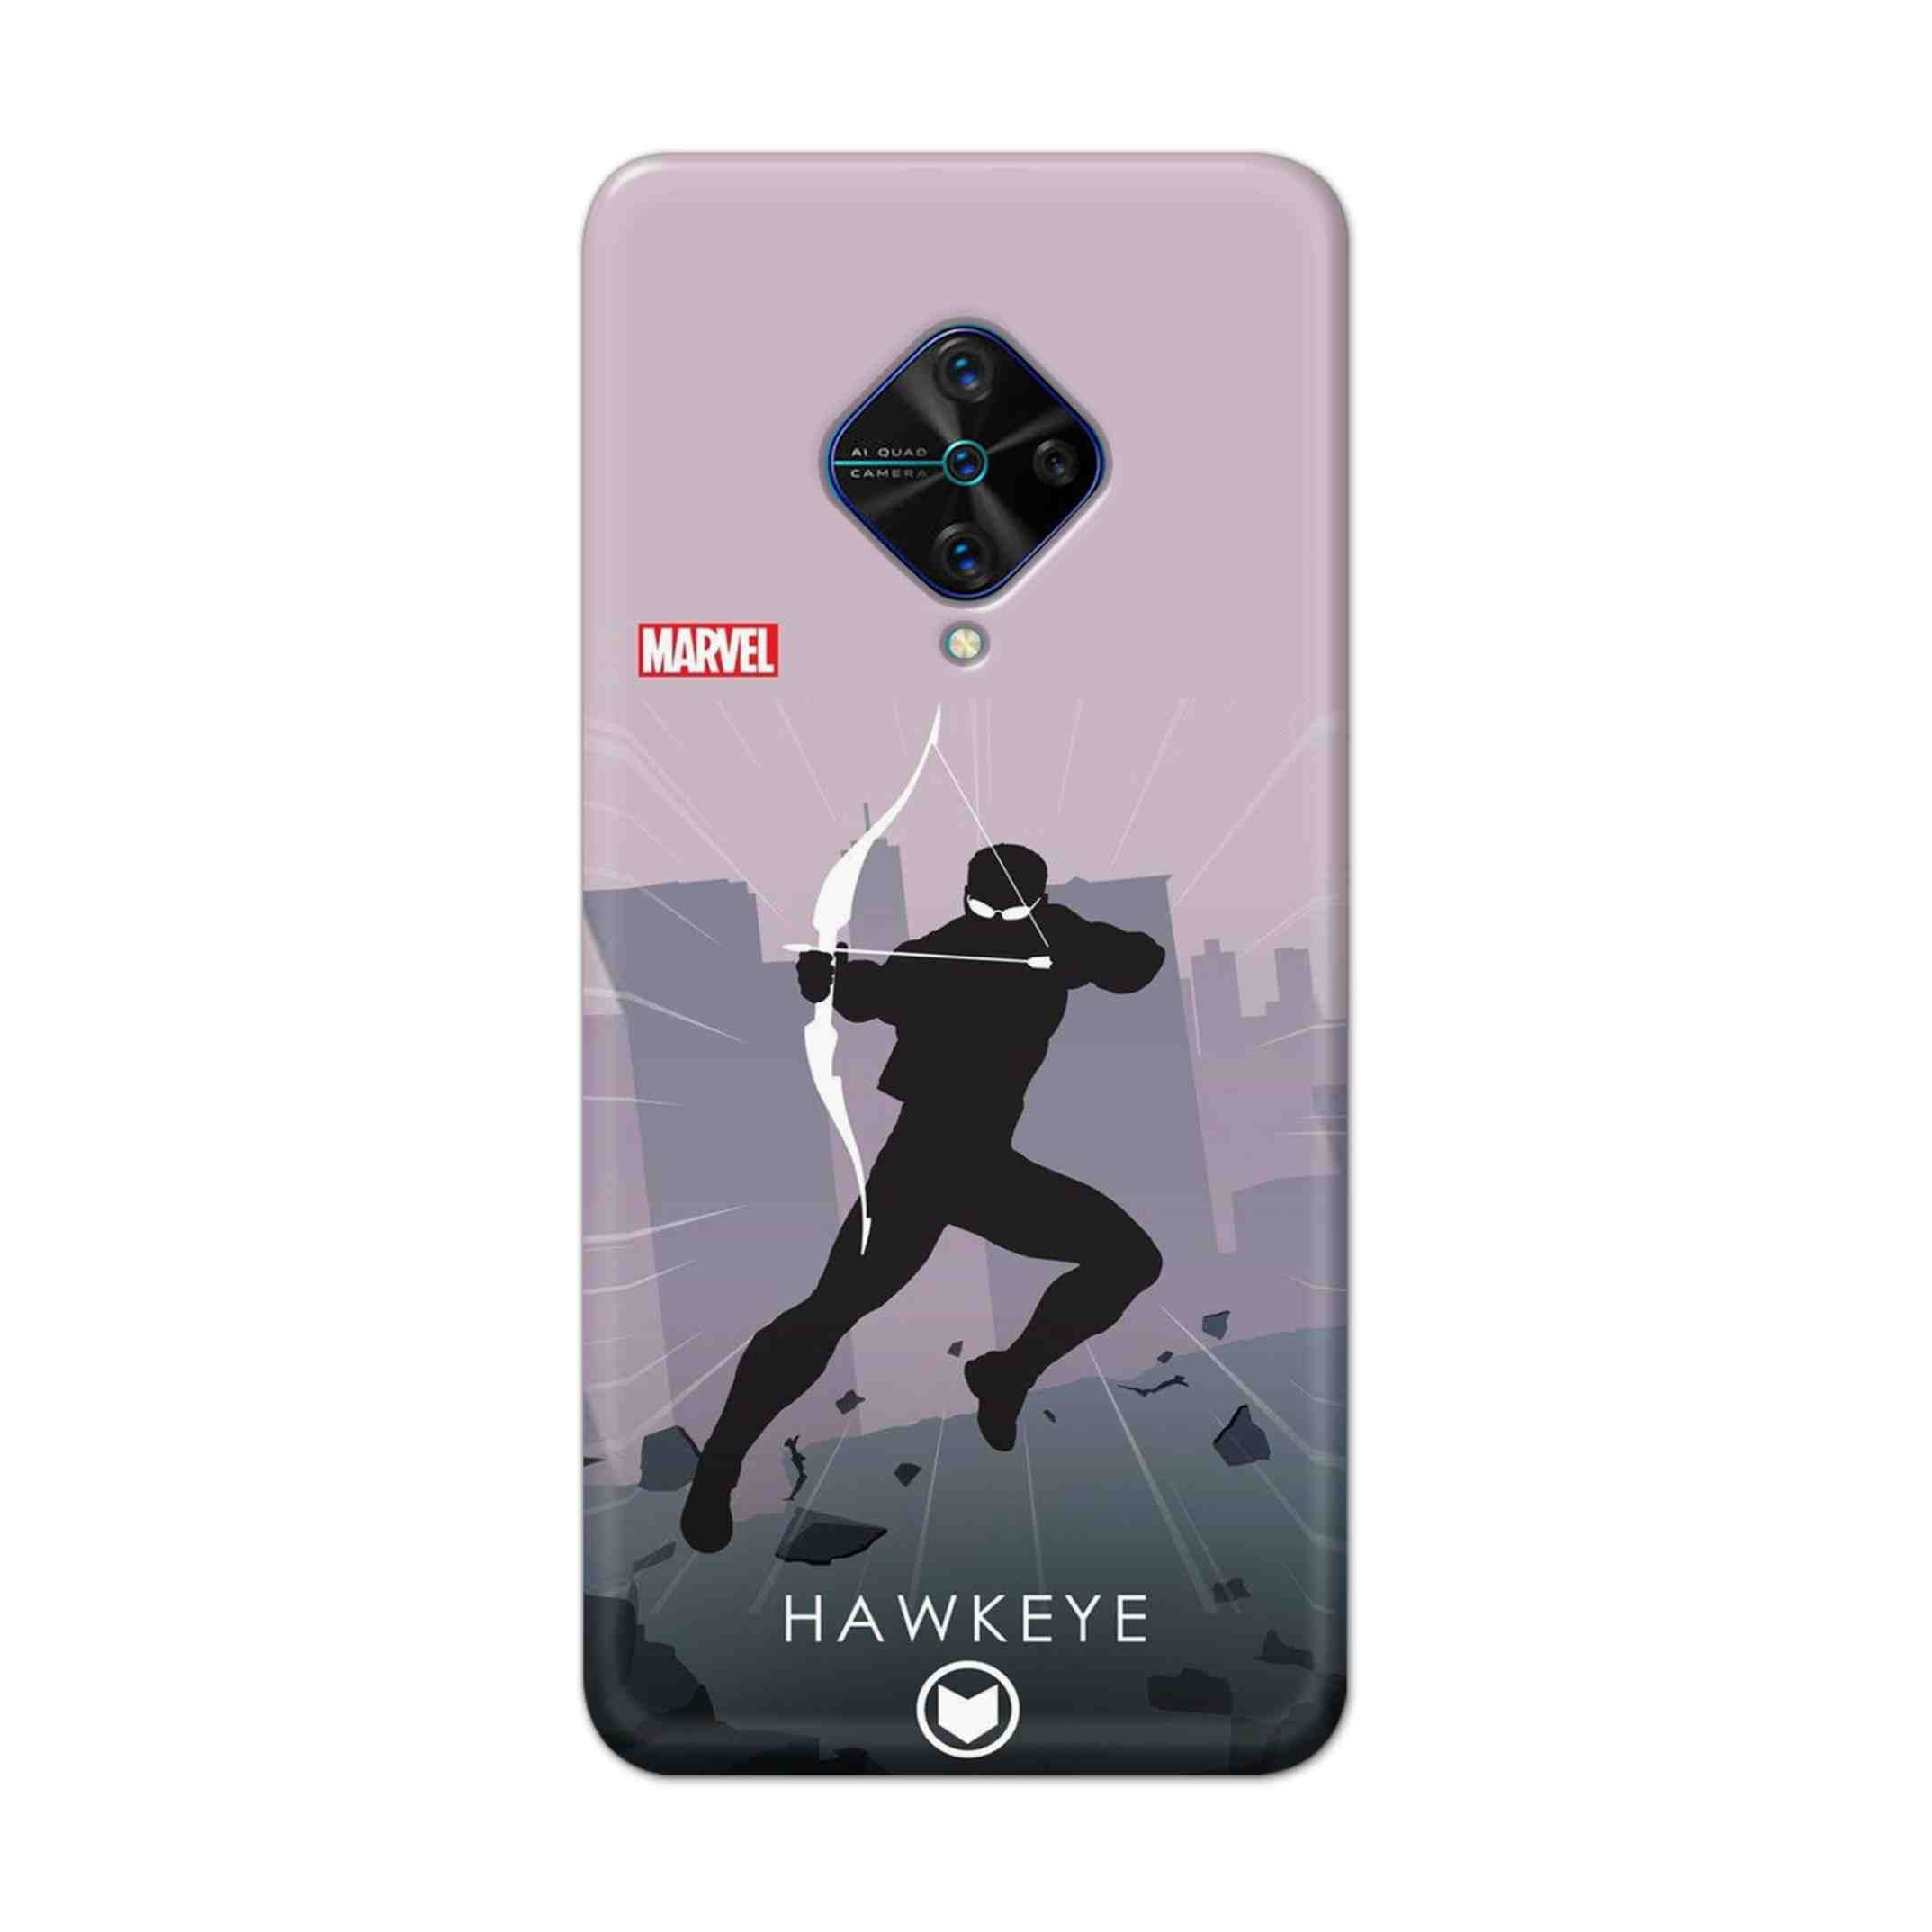 Buy Hawkeye Hard Back Mobile Phone Case Cover For Vivo S1 Pro Online